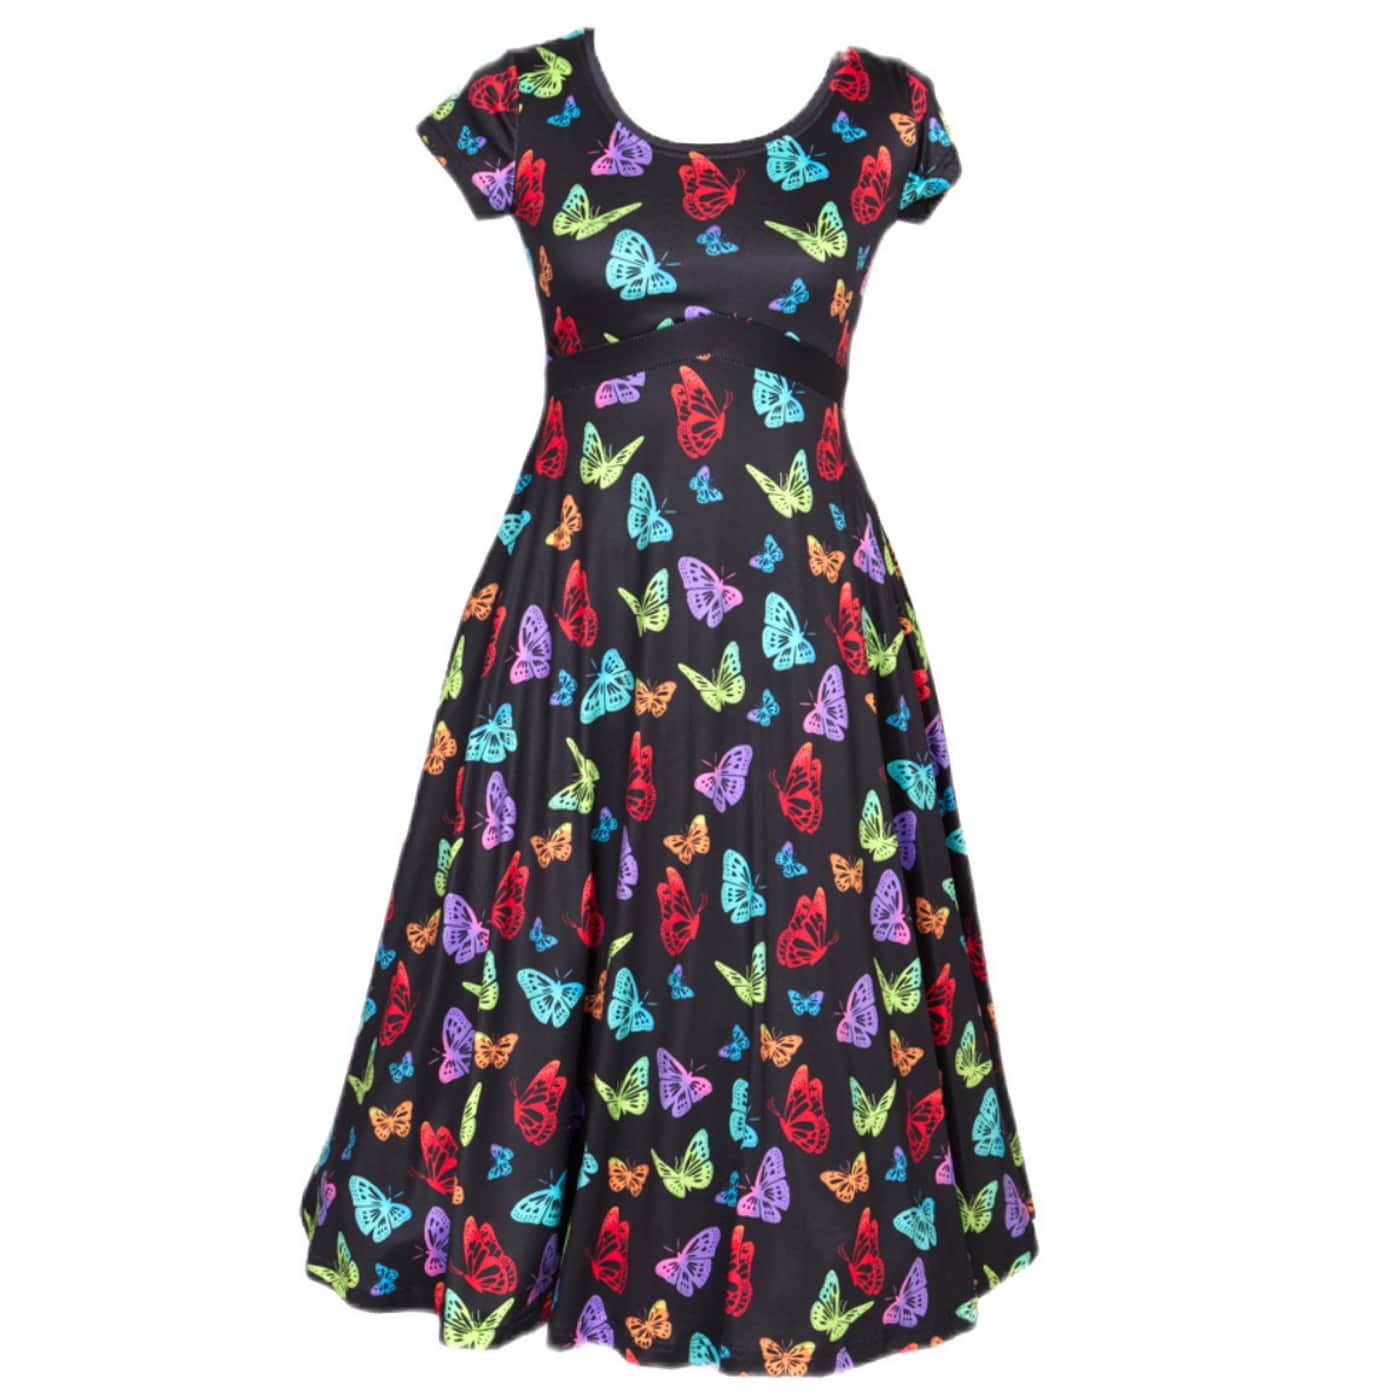 Kaleidoscope Tea Dress by RainbowsAndFairies.com.au (Monarch Butterfly - Butterflies - Rainbow - Kitsch - Dress With Pockets - Vintage Inspired) - SKU: CL_TEADR_KSCOP_ORG - Pic-01